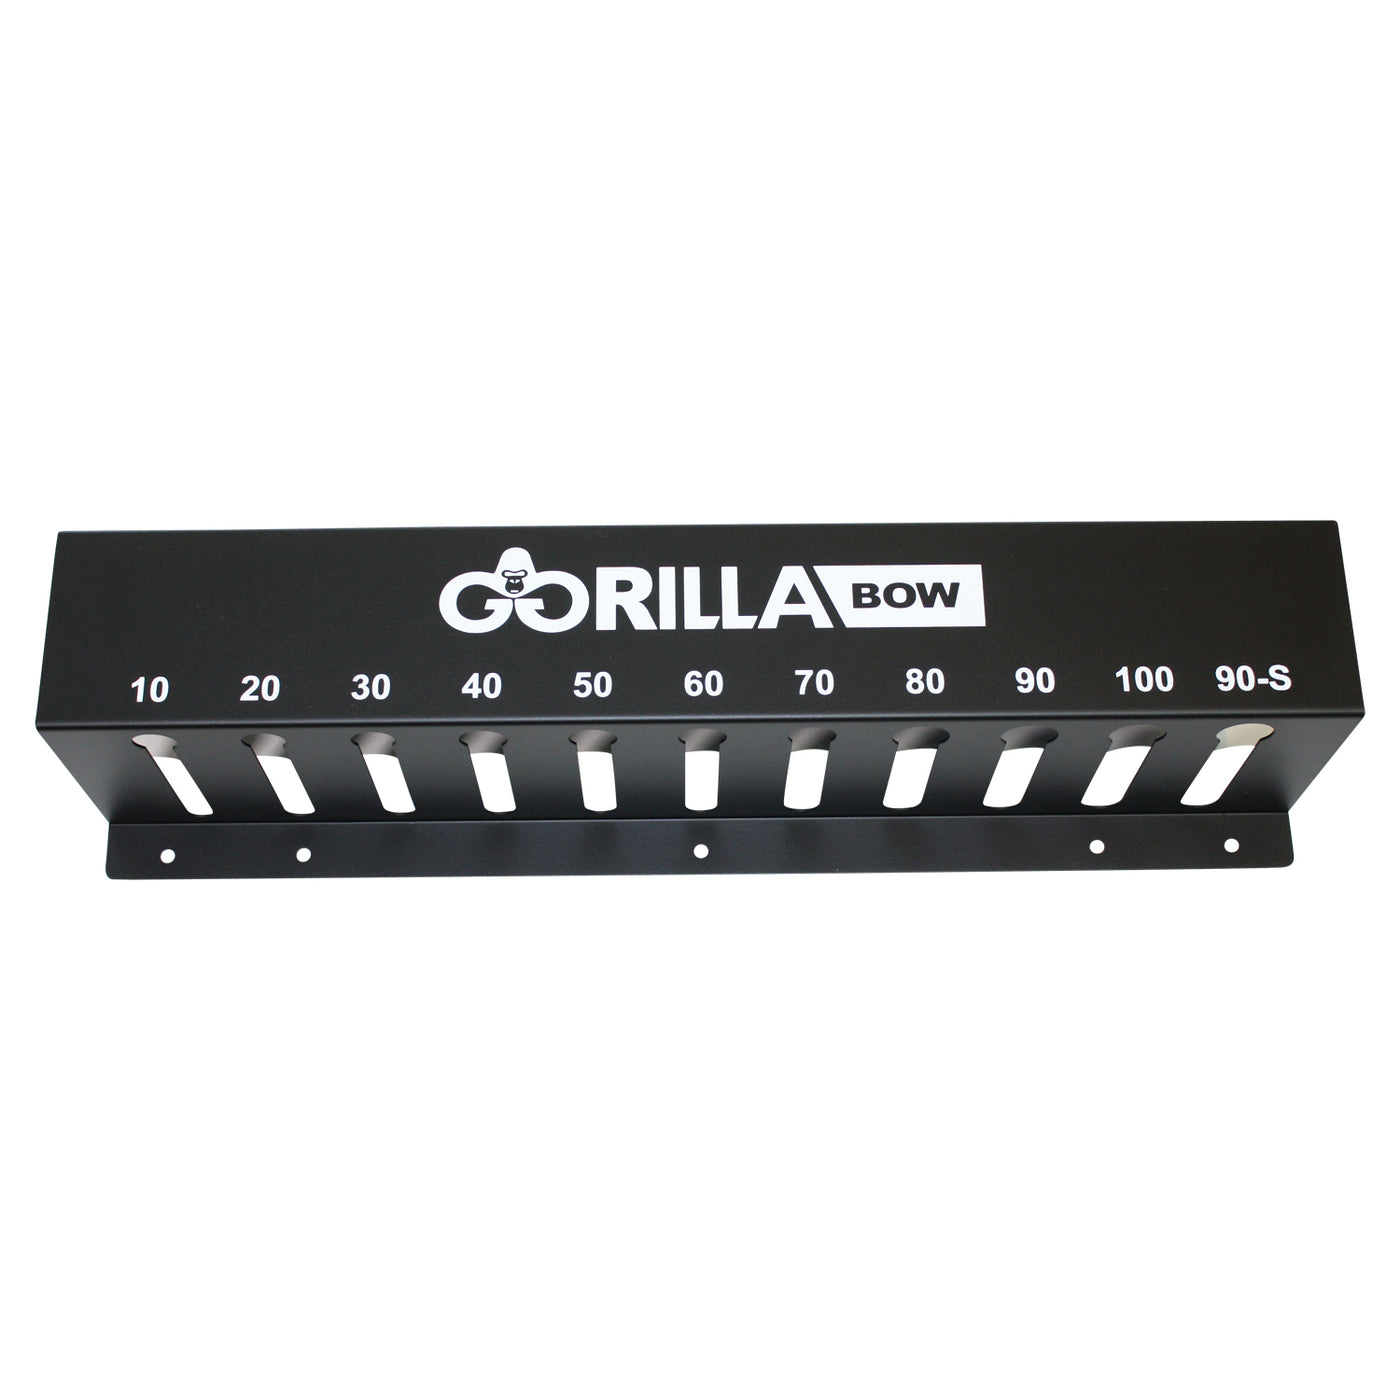 Gorilla Bow Band Rack in black